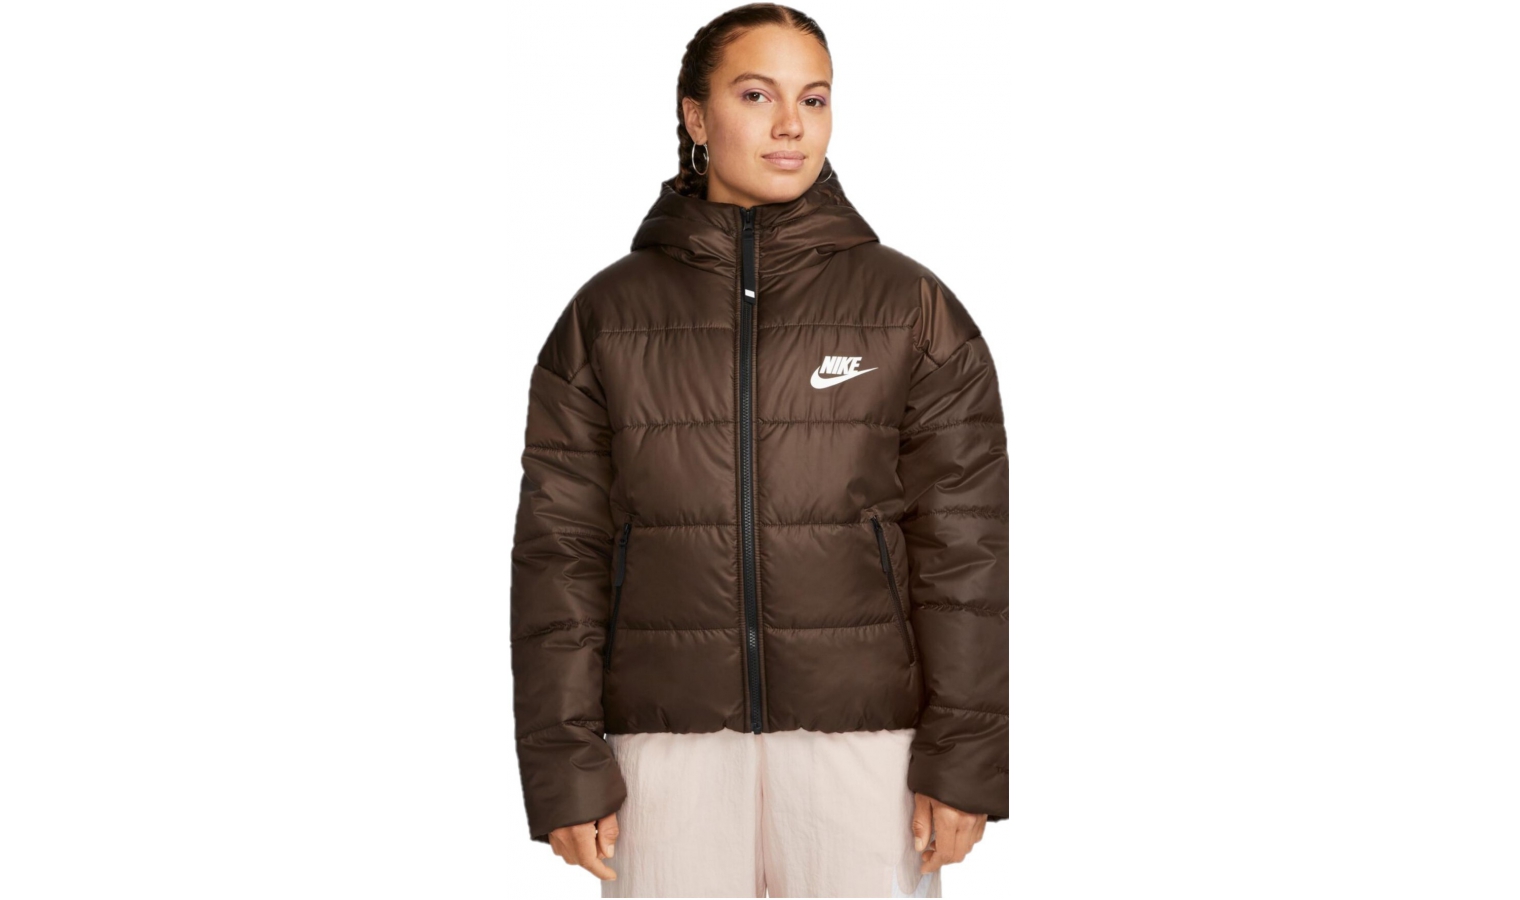 Womens winter jacket HD RPL JKT AD TF SYN Nike brown | NSW W W